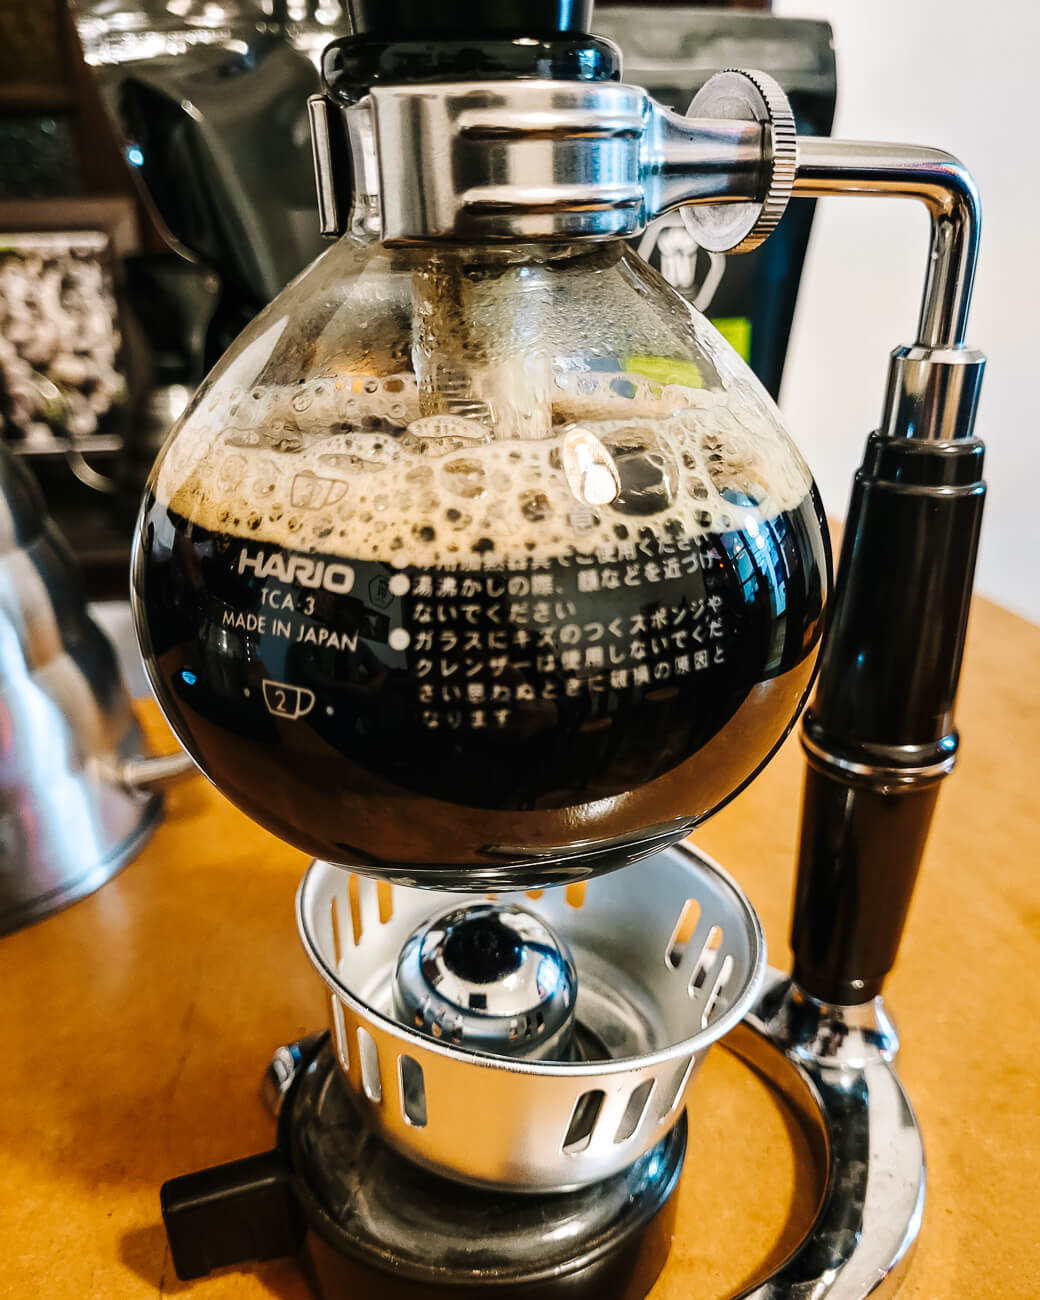 Coffee extraction method at Divino Café Especial.

